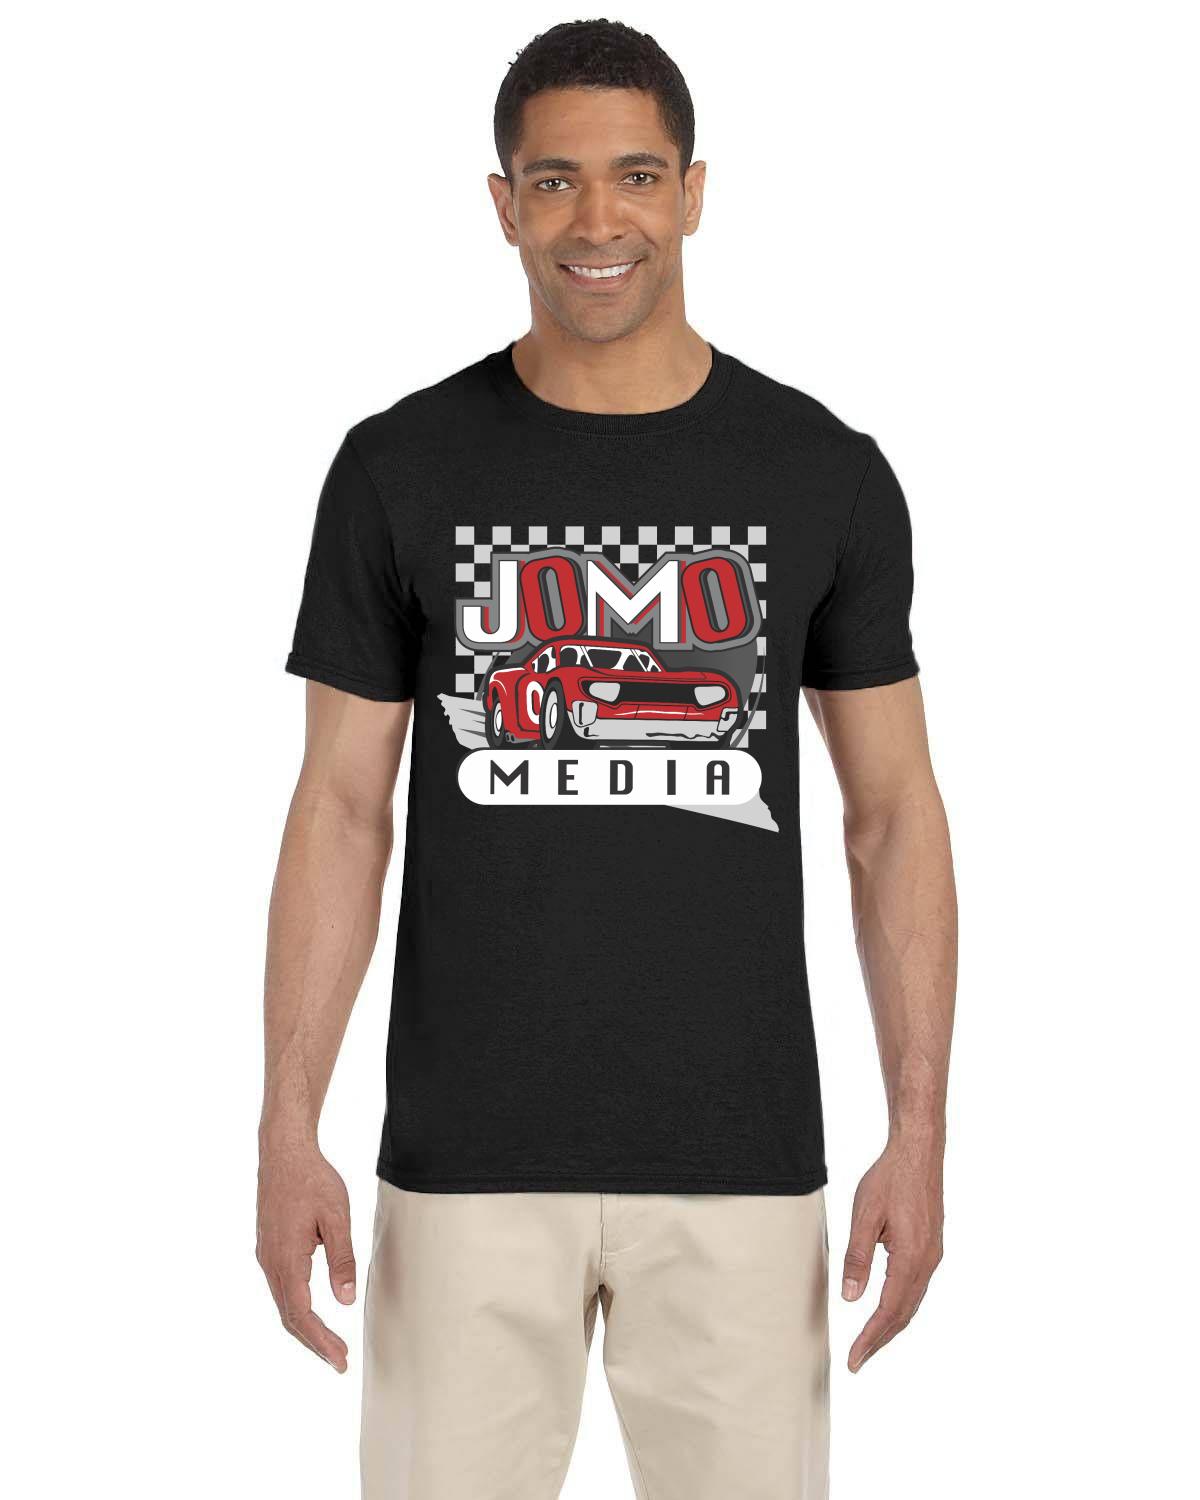 JOMO Media Supporters Men's SoftStyle tshirt